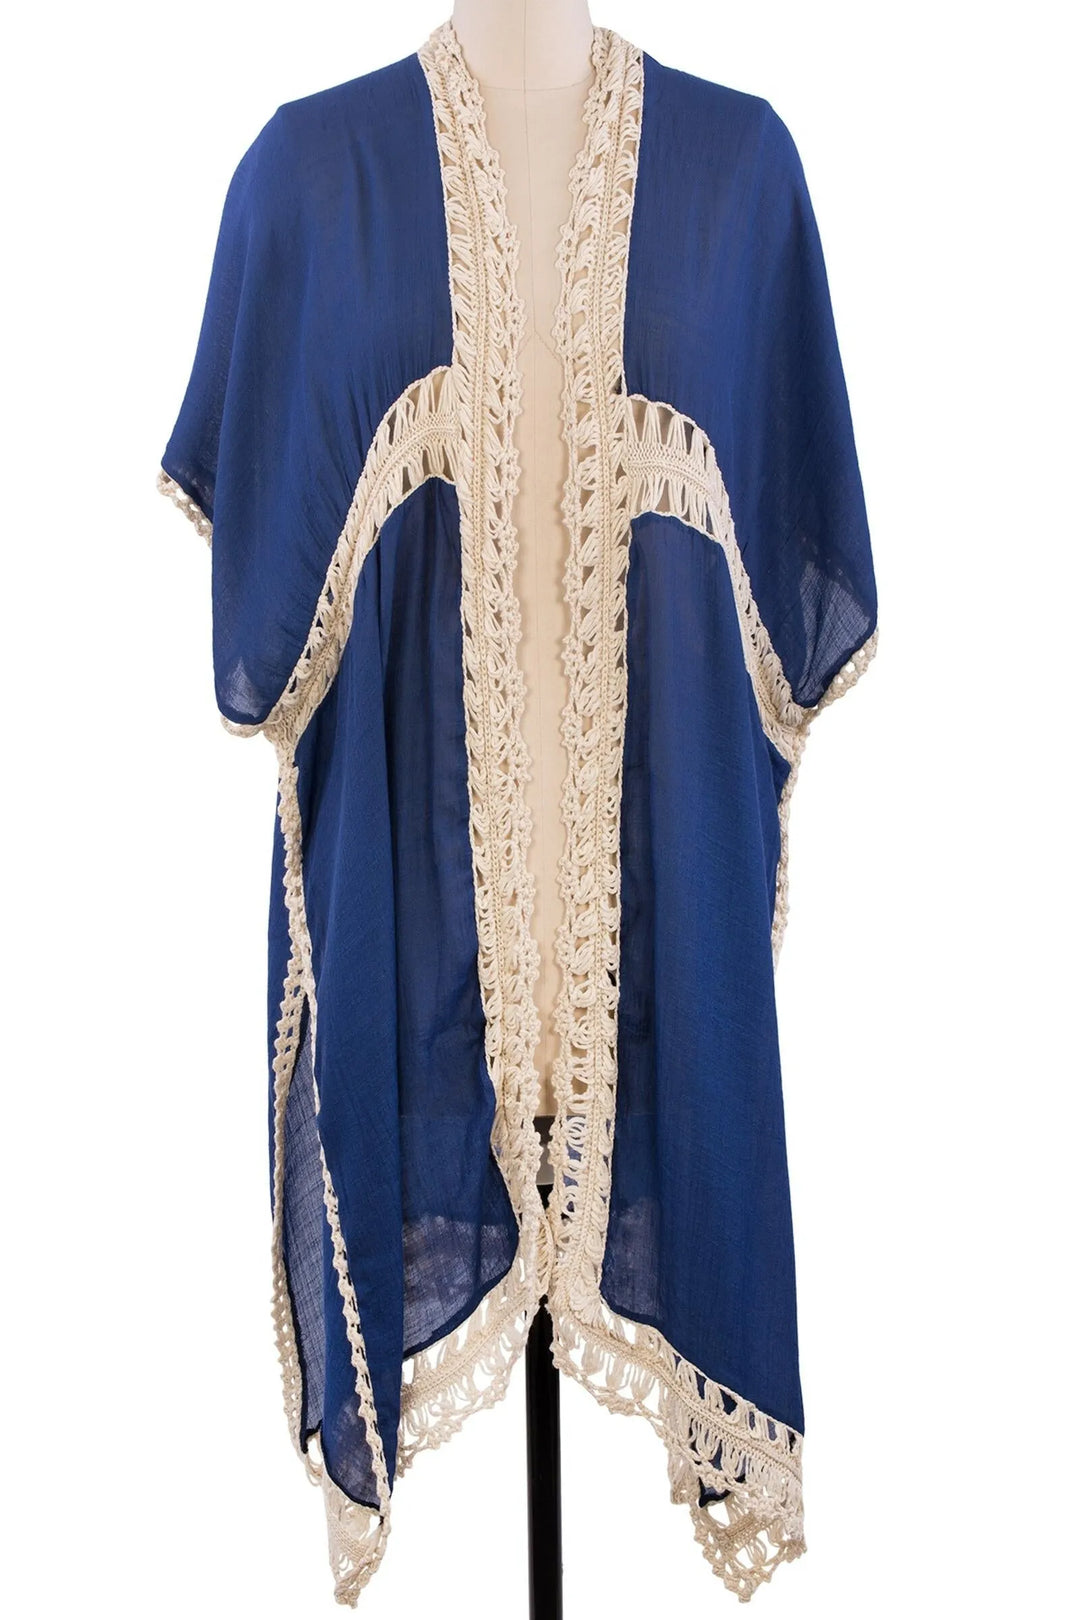 Costa Crochet Kimono Cover Up - SAACHI - Medium Blue / One Size — Fits All - Kimono